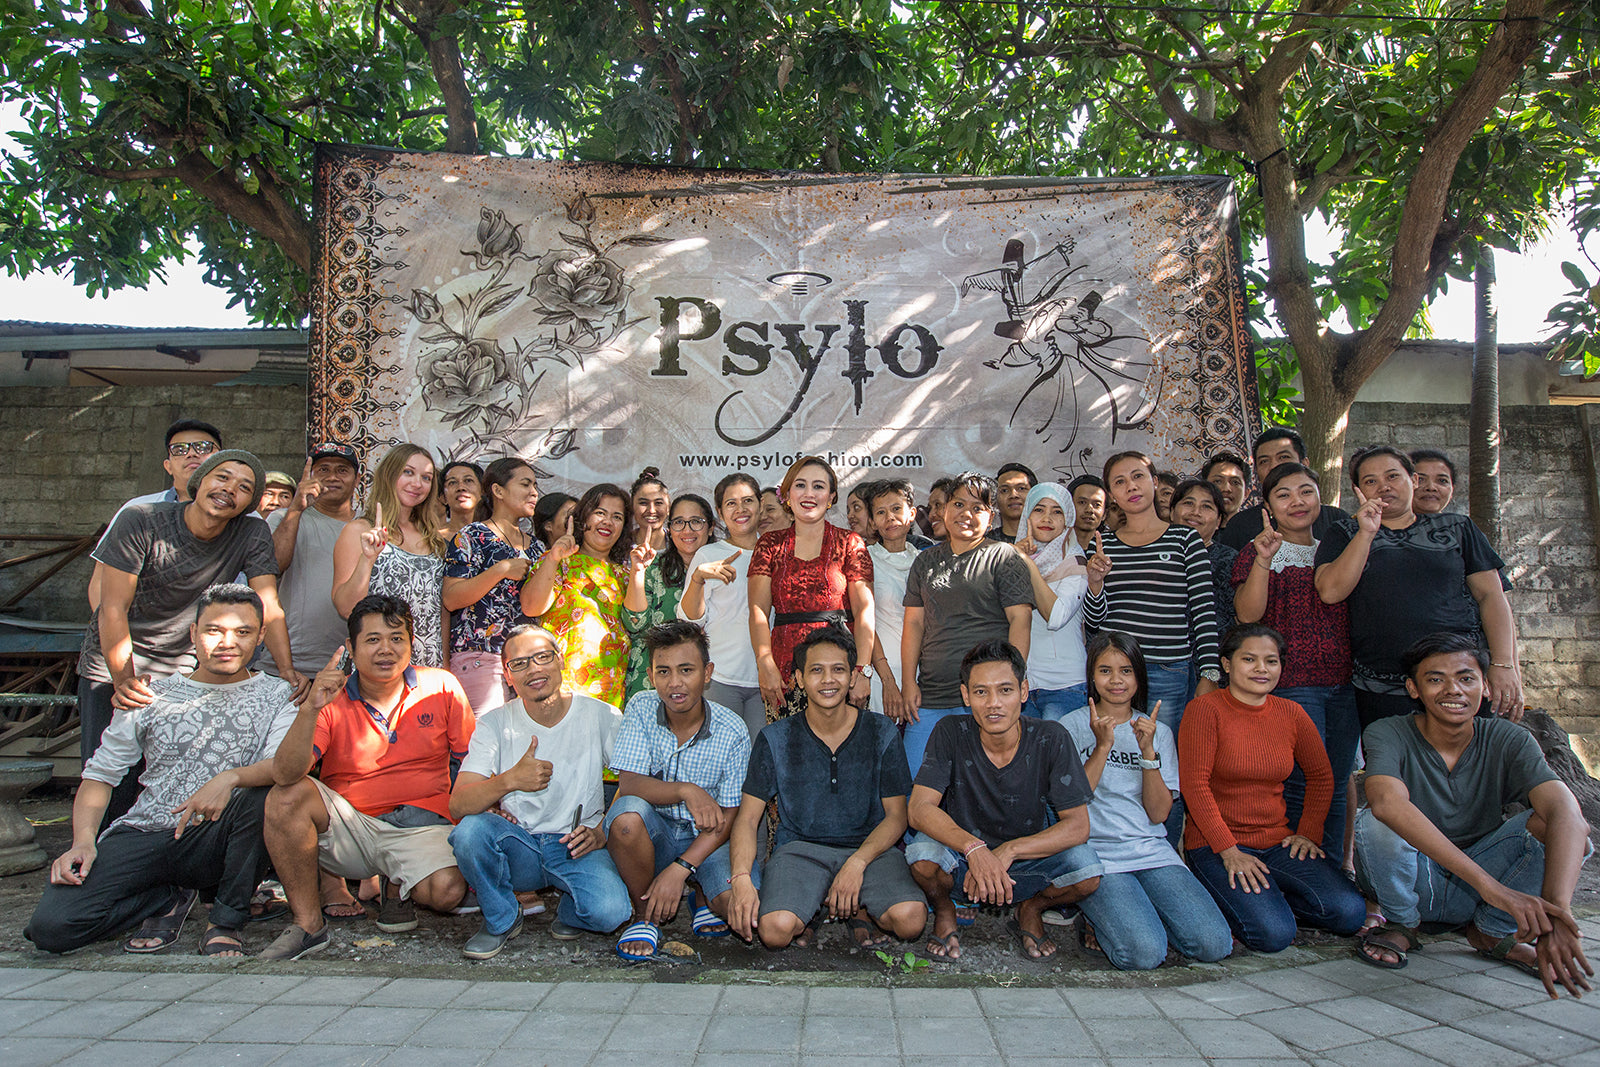 Psylo fashion Bali team the people who make ethical streetwear at Psylo